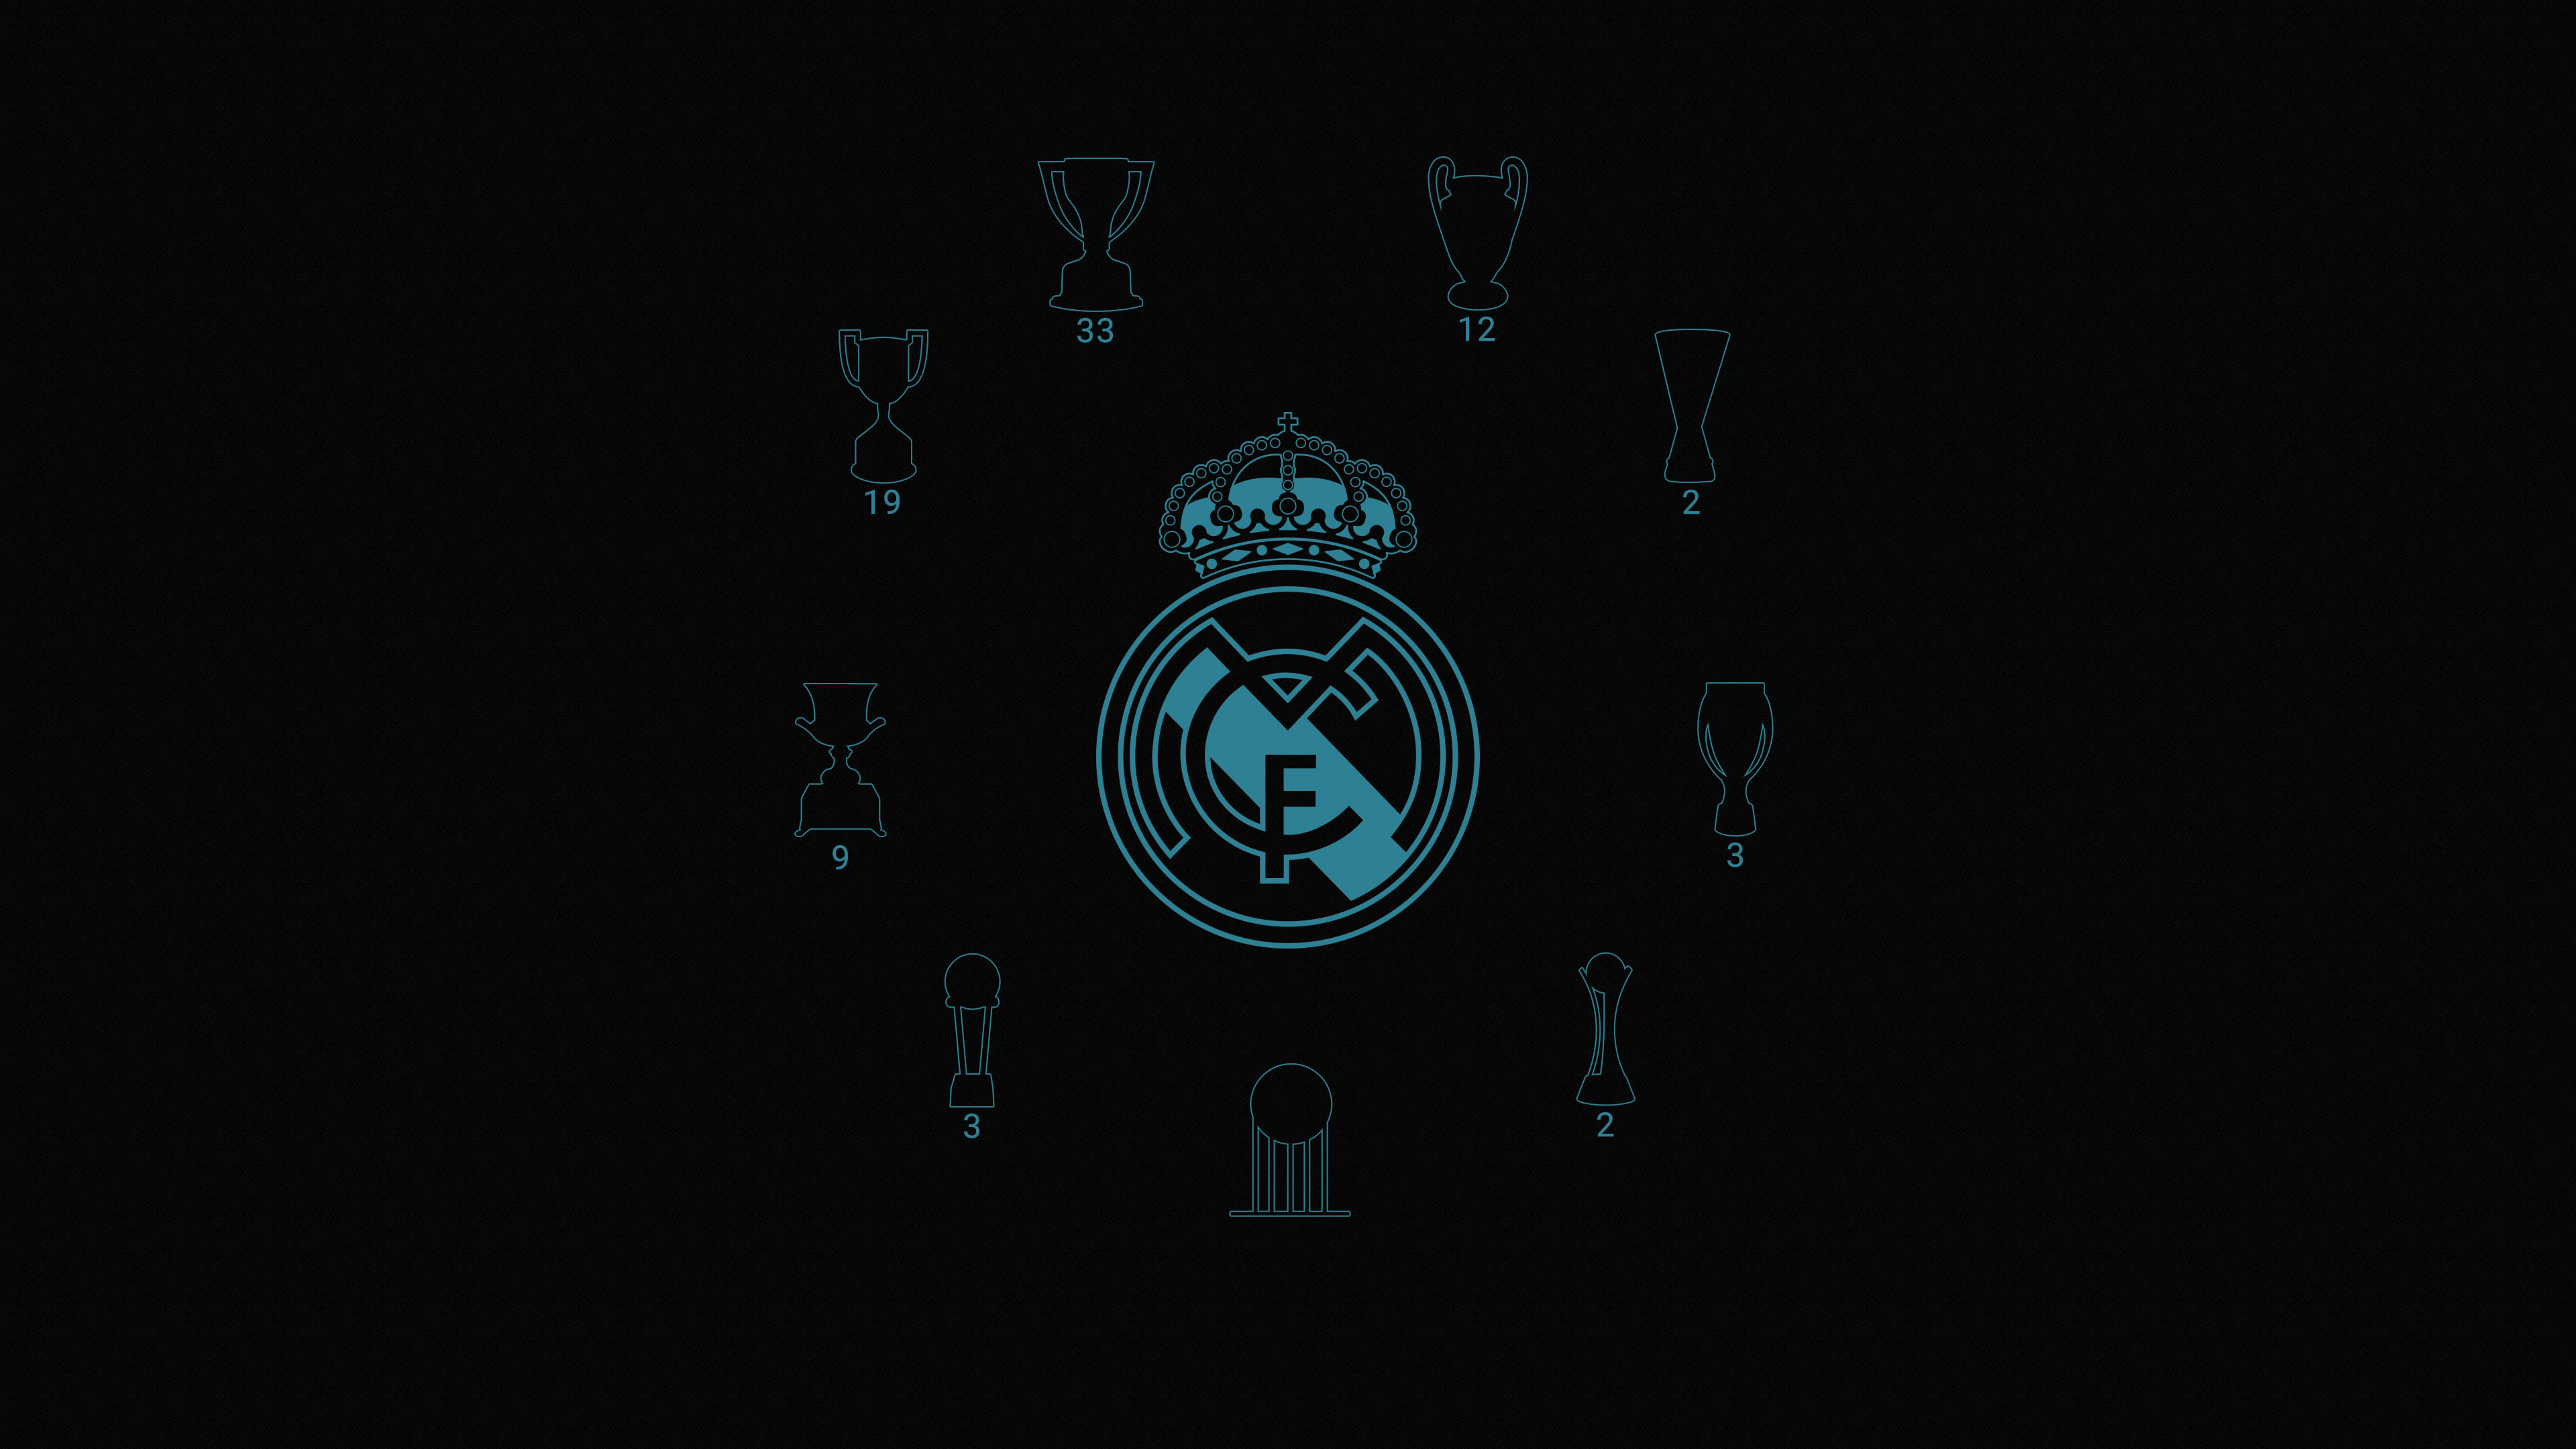 Real Madrid Away Wallpaper (2017/18) by khalidvawda on ...